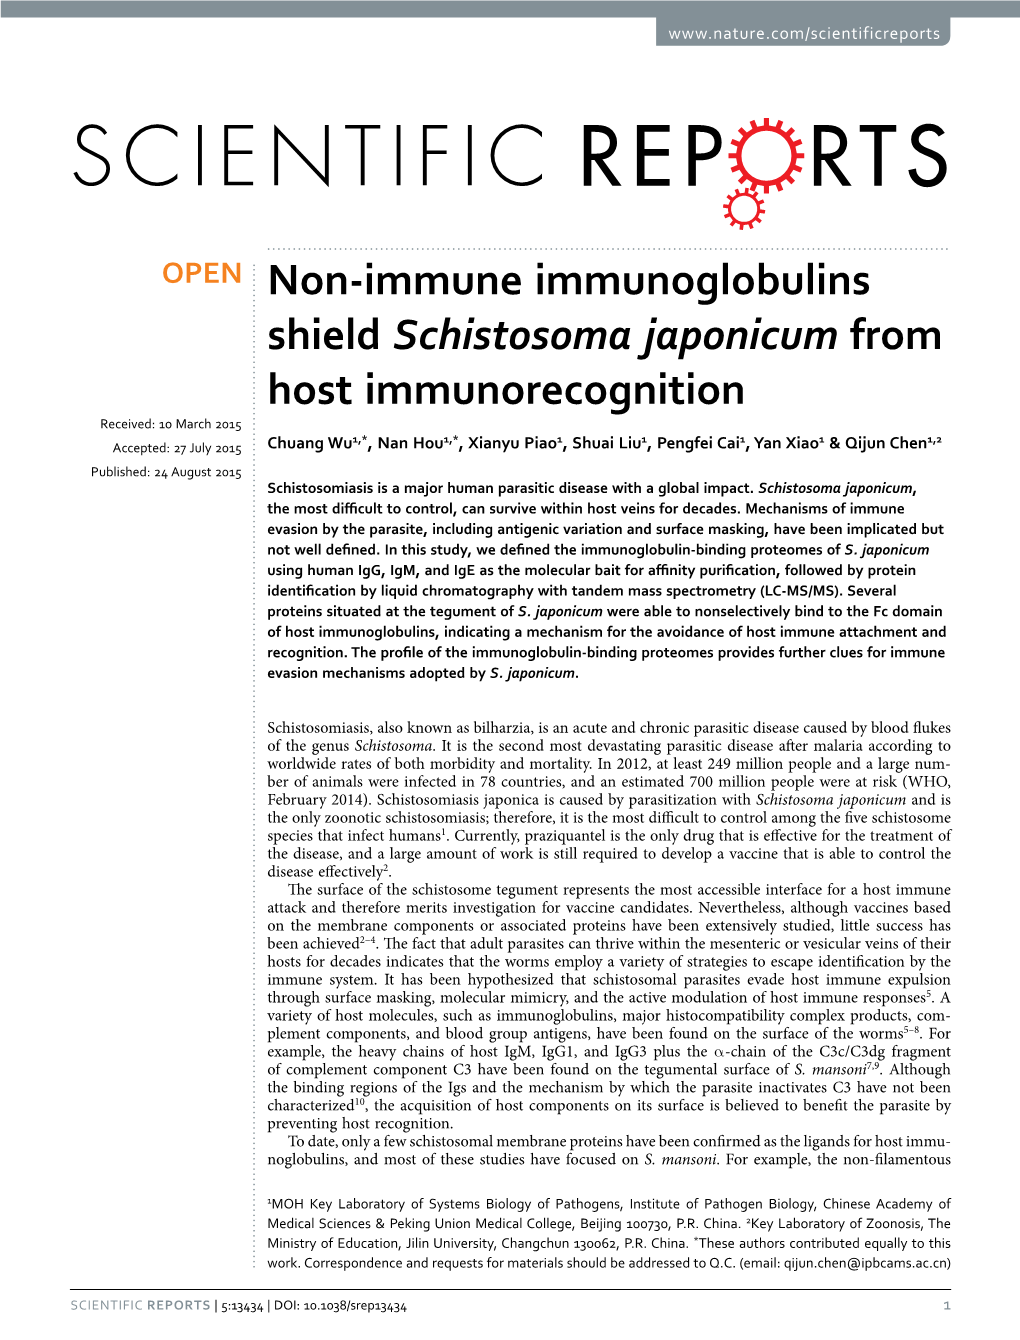 Non-Immune Immunoglobulins Shield Schistosoma Japonicum from Host